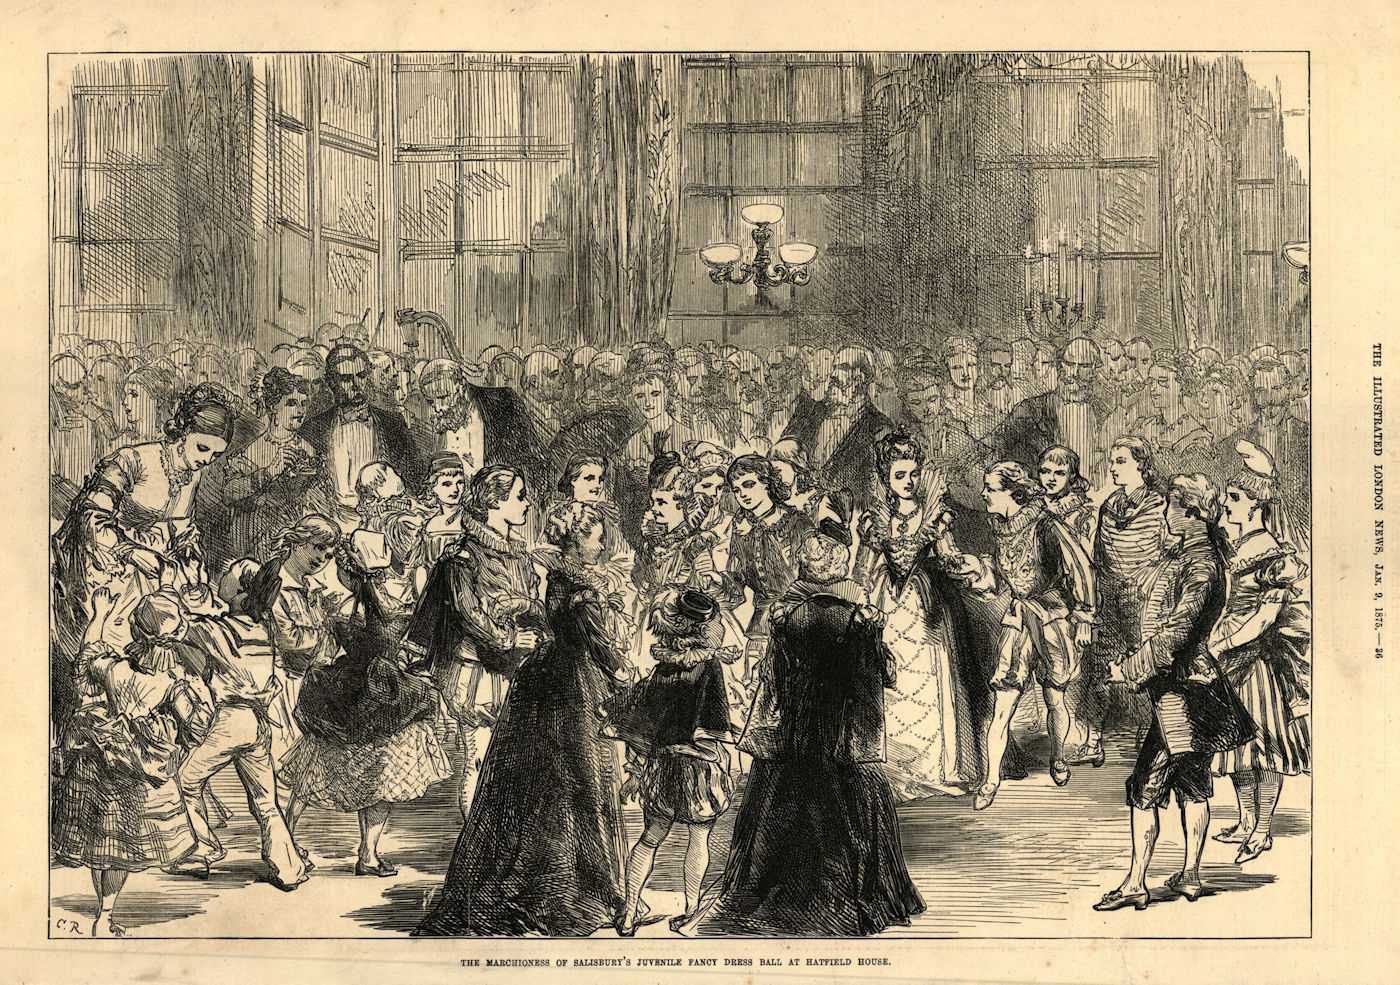 The Marchioness of Salisbury's children's fancy dress ball, Hatfield House 1875